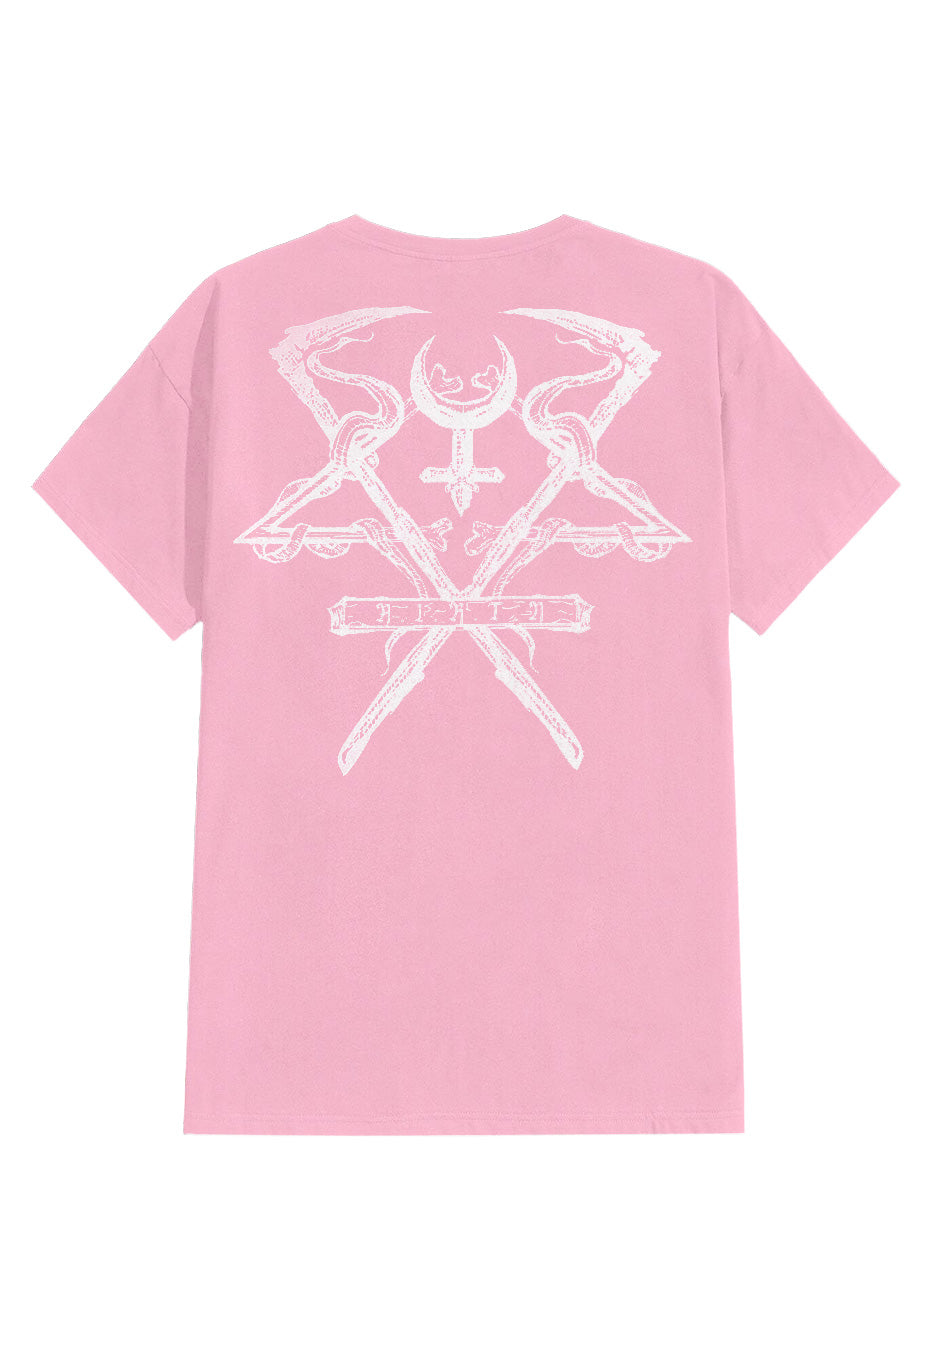 Lorna Shore - Logo Light Pink - T-Shirt